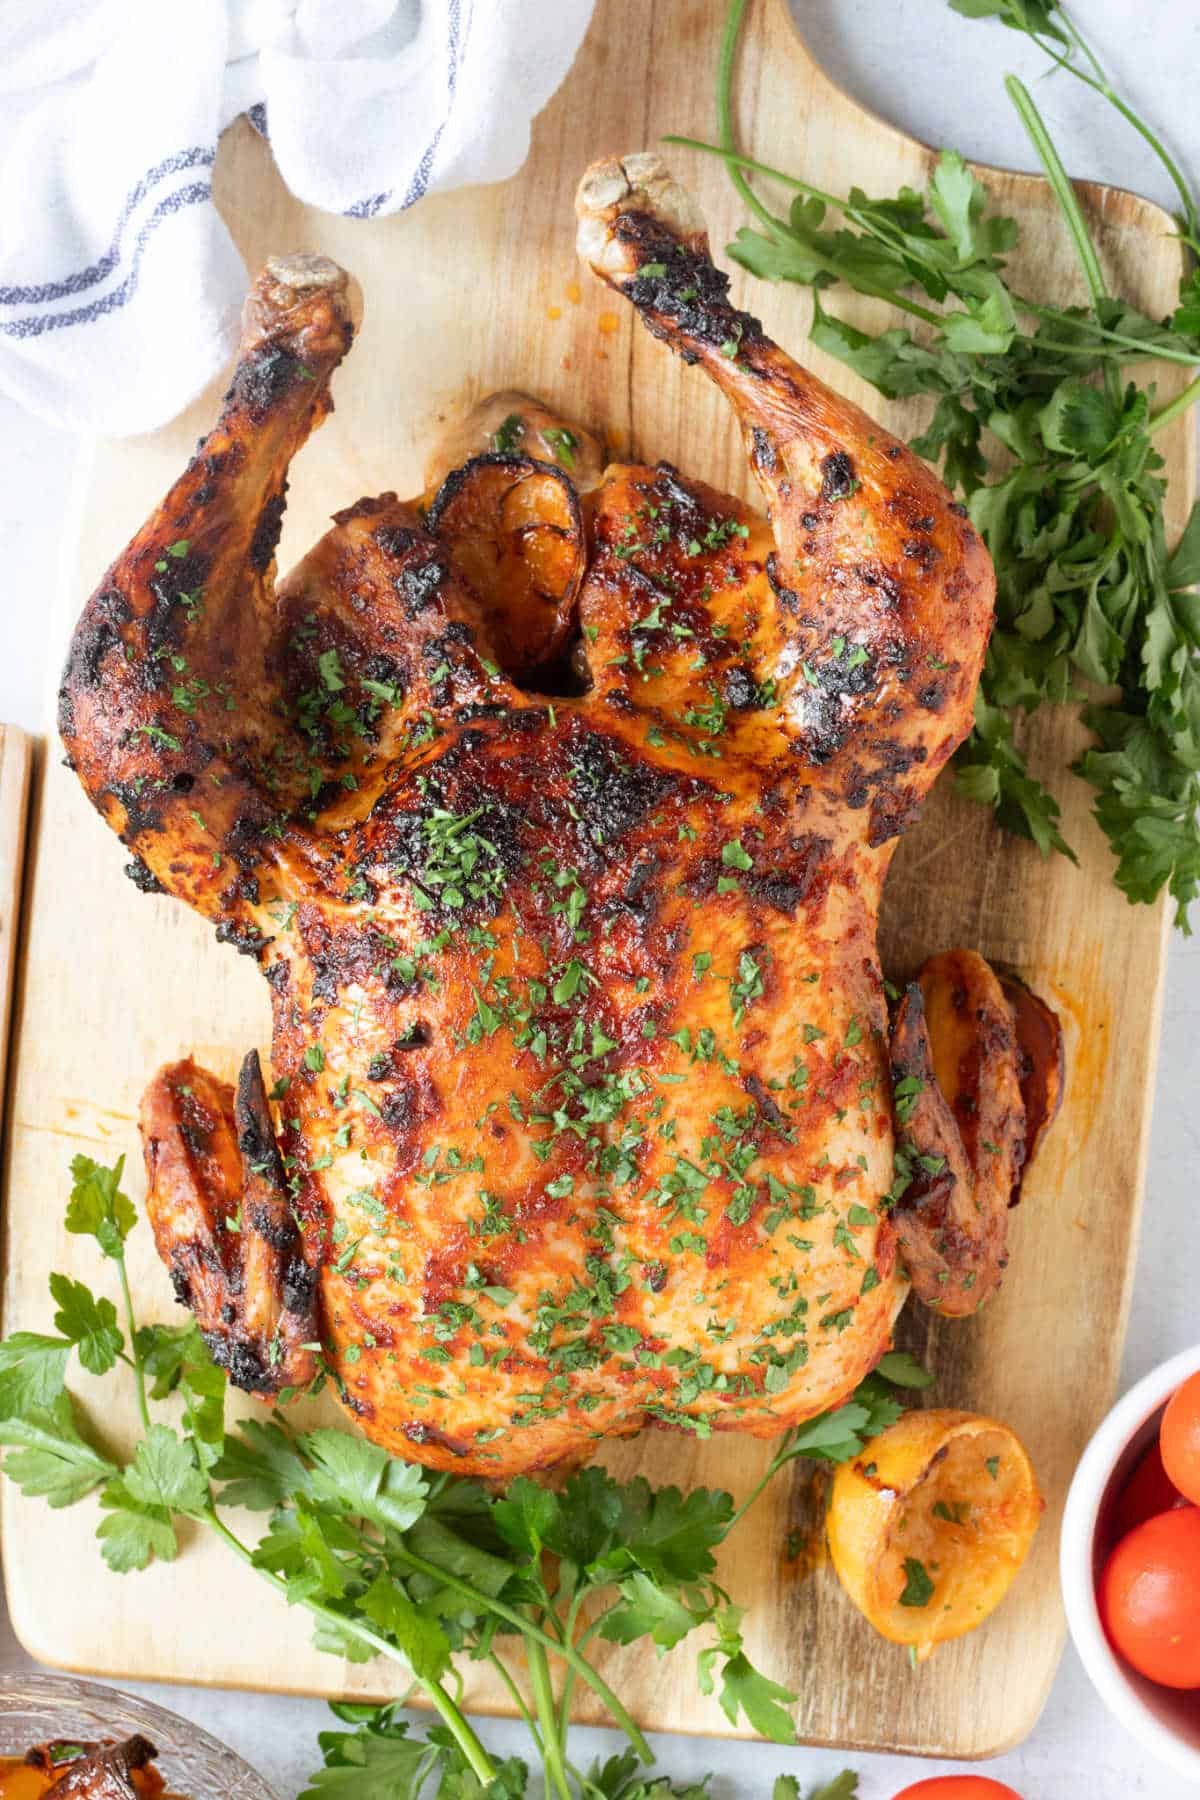 Juicy harissa roast chicken ready for carving.